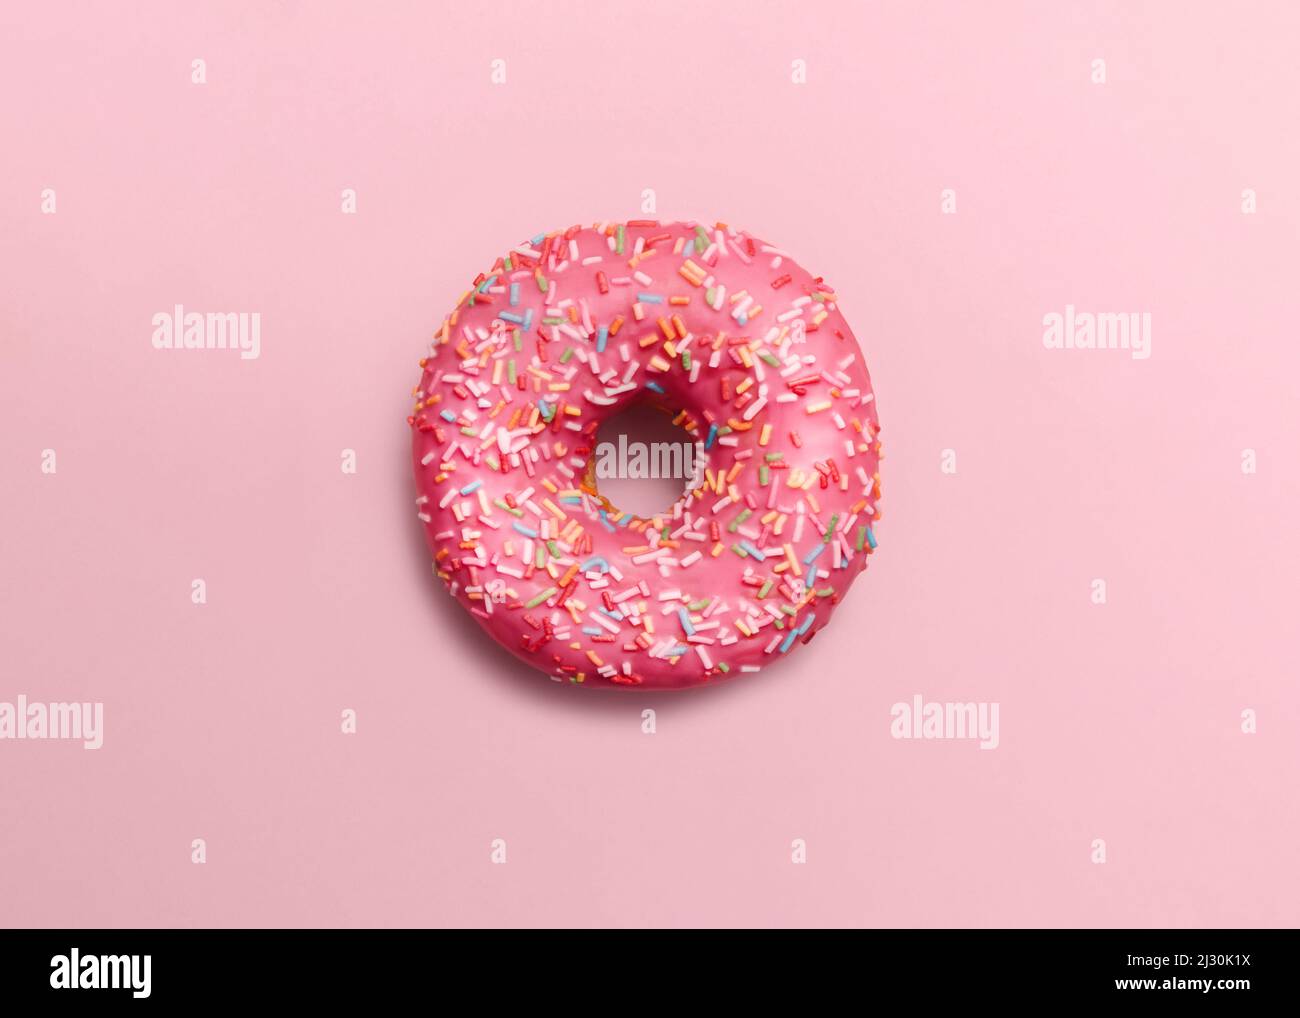 Pink glazed doughnut with sprinkles on pastel pink backdrop Stock Photo